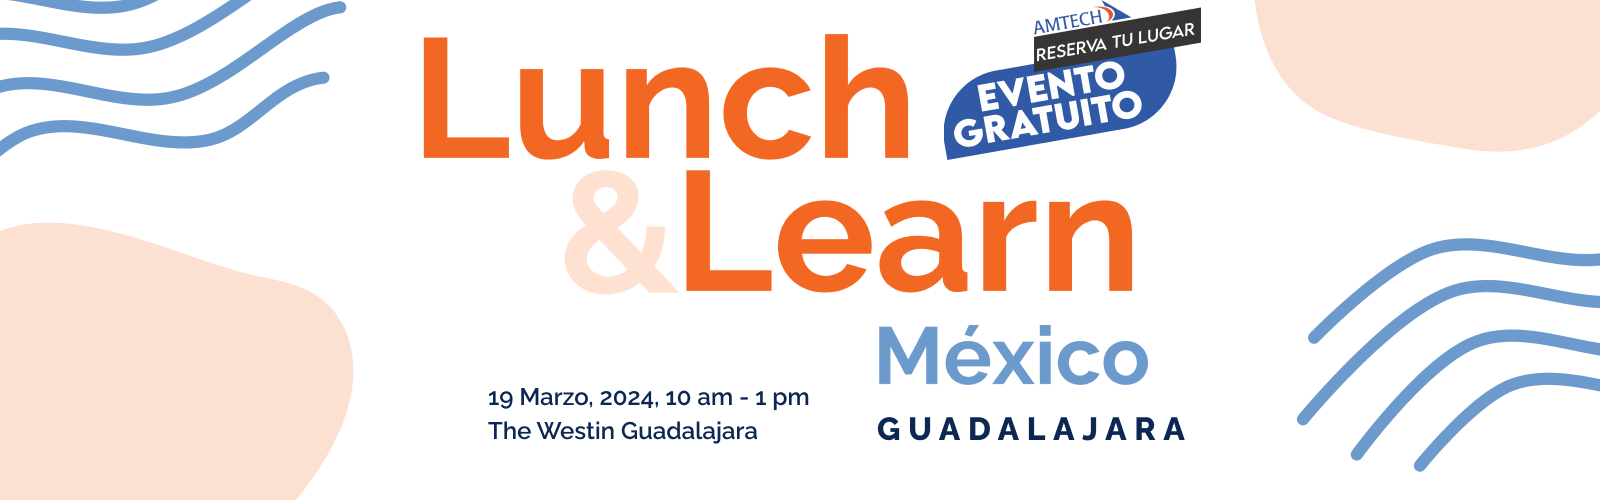 Lunch and Learn Landing Page Hero_Guadalajara (1)